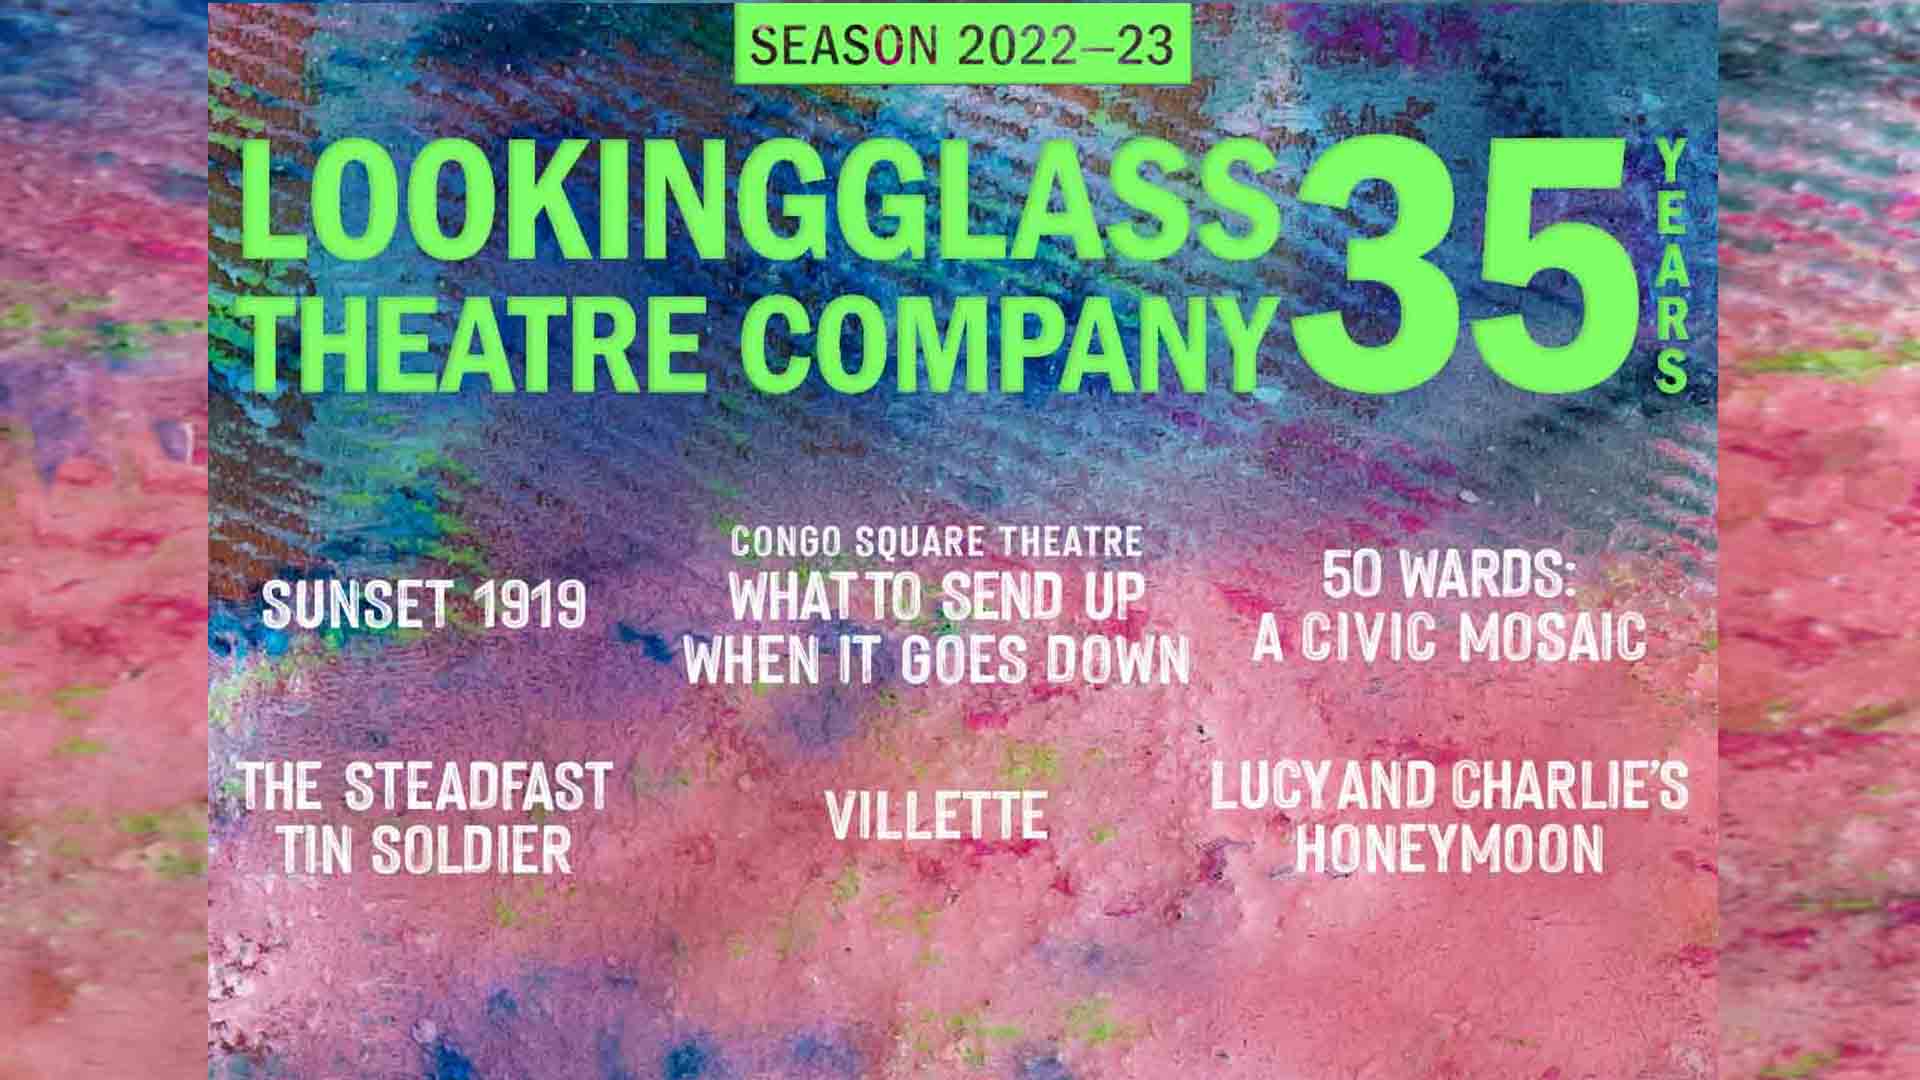 Lookingglass Theatre Company Announces 2022-23 Season